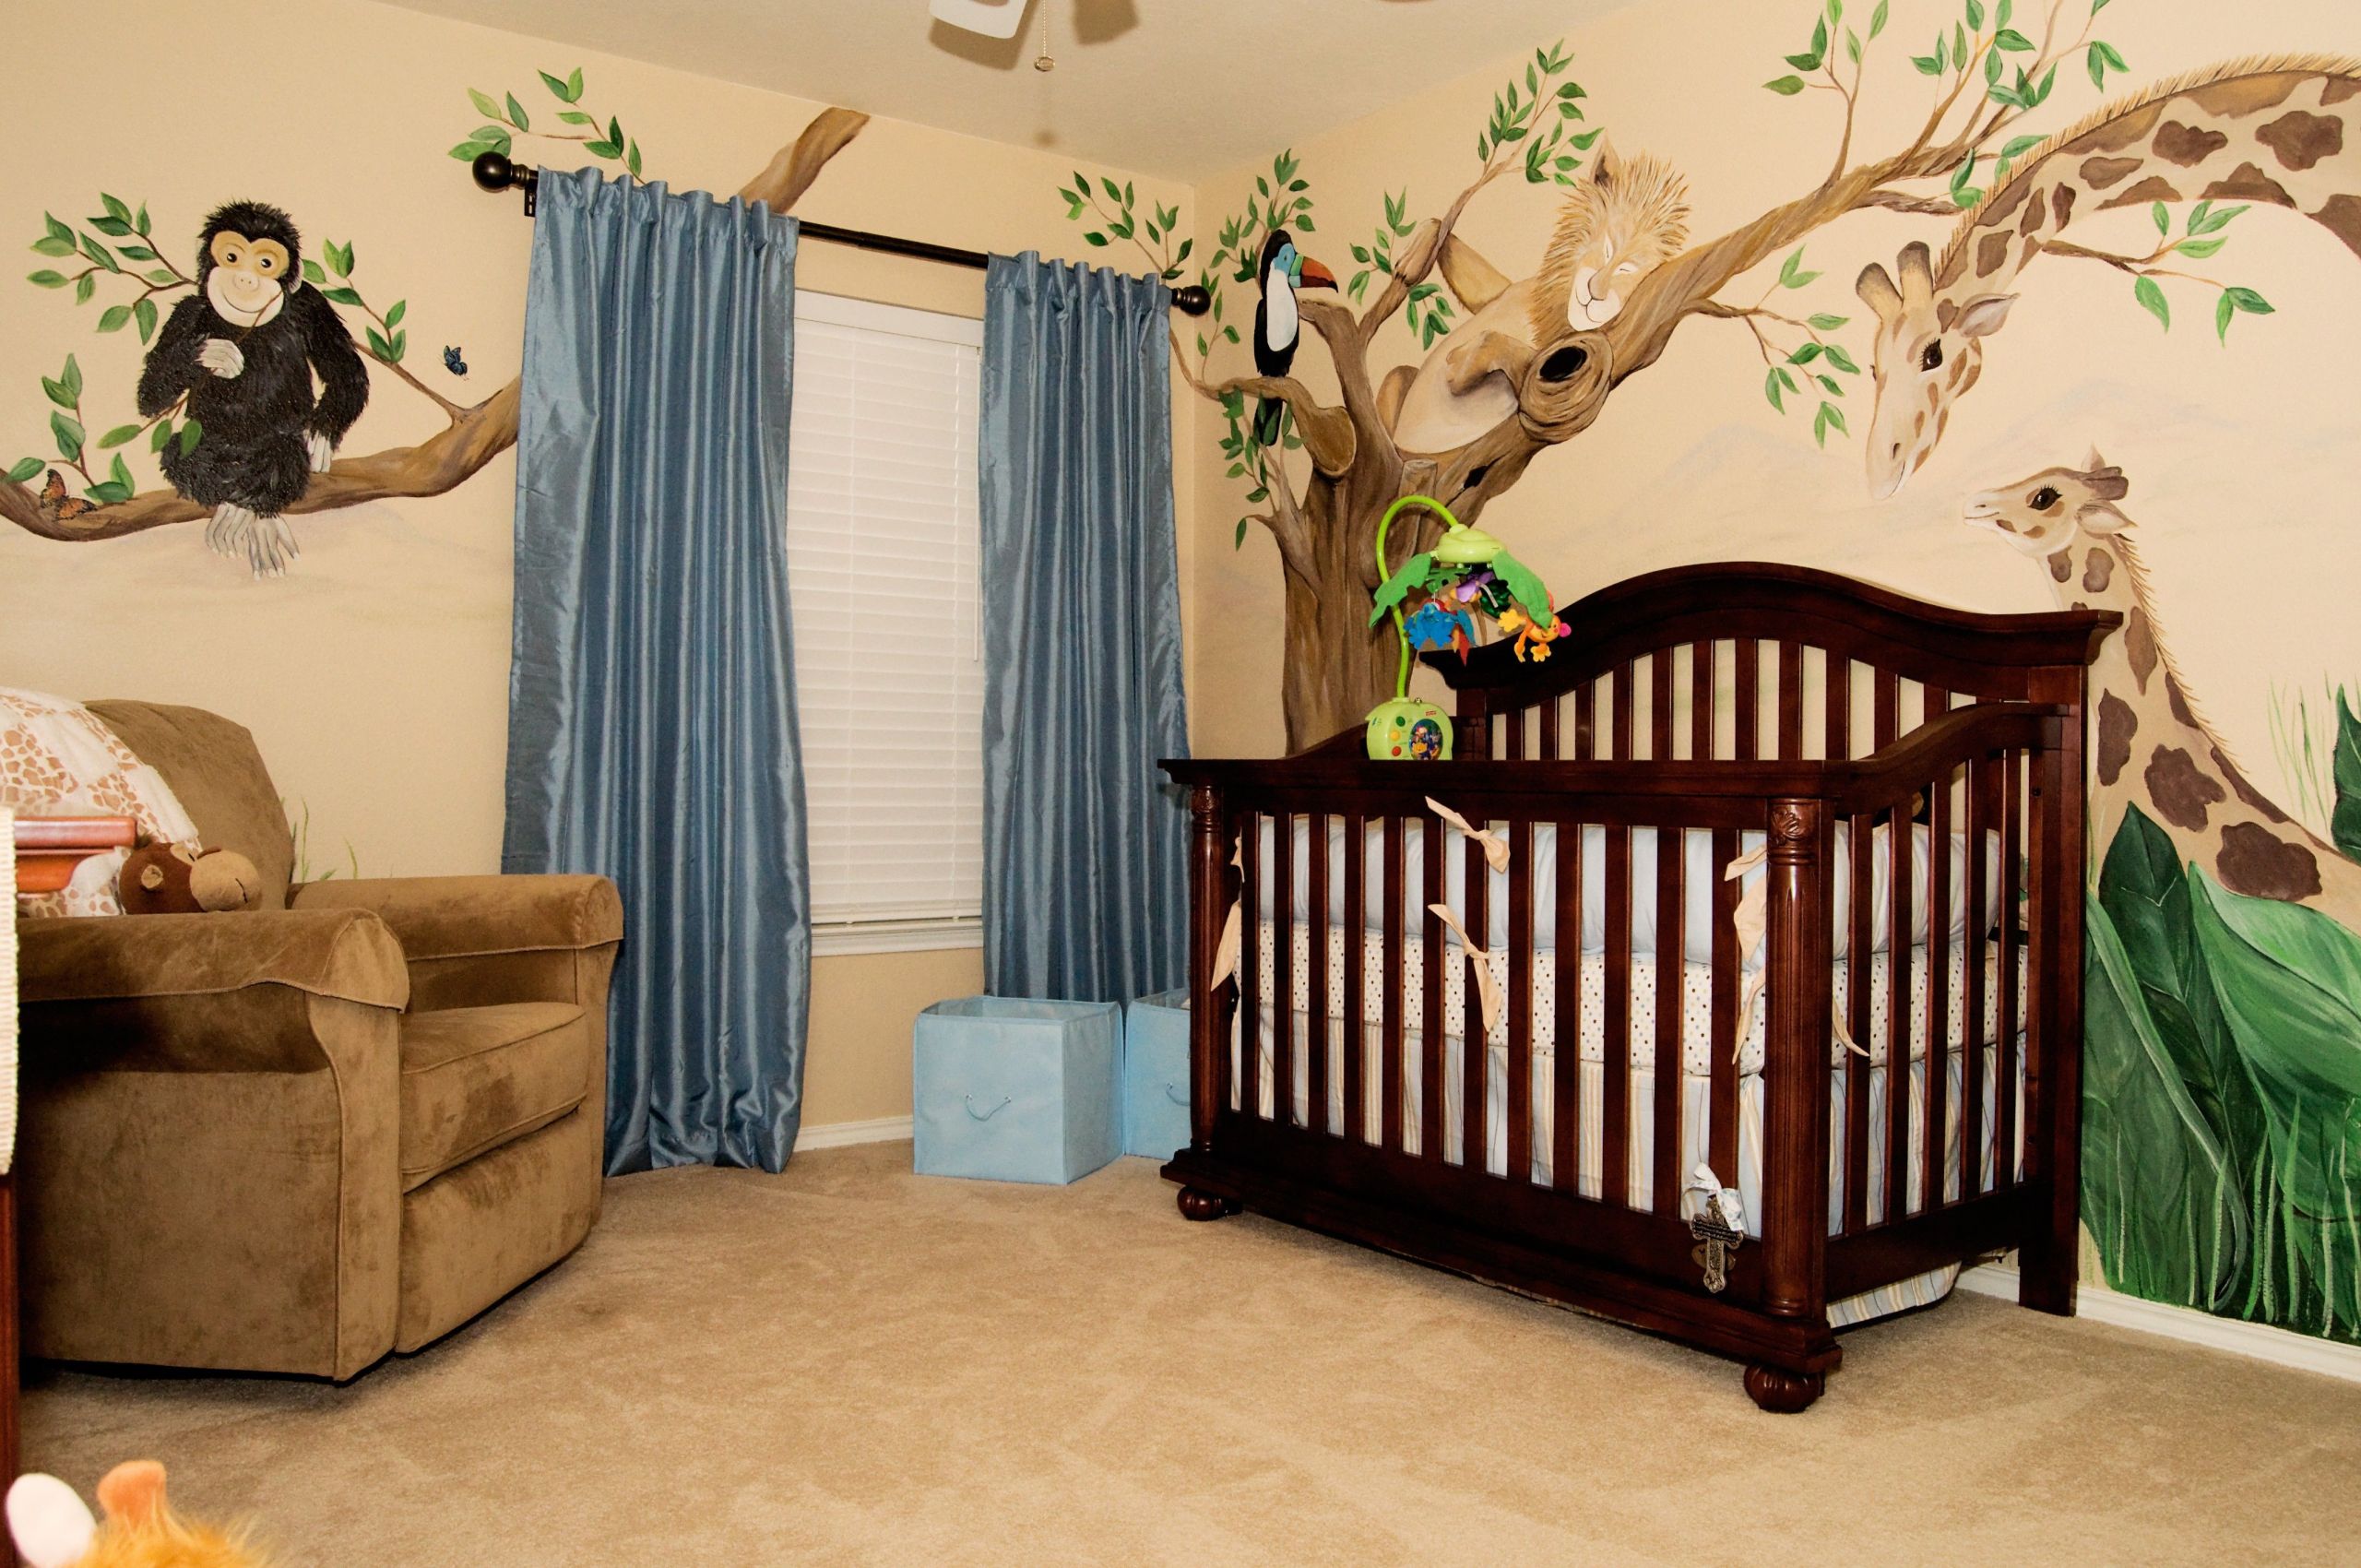 Wall Decorations For Baby Boy Room
 boy baby nursery closet ideas boy decorating room decor